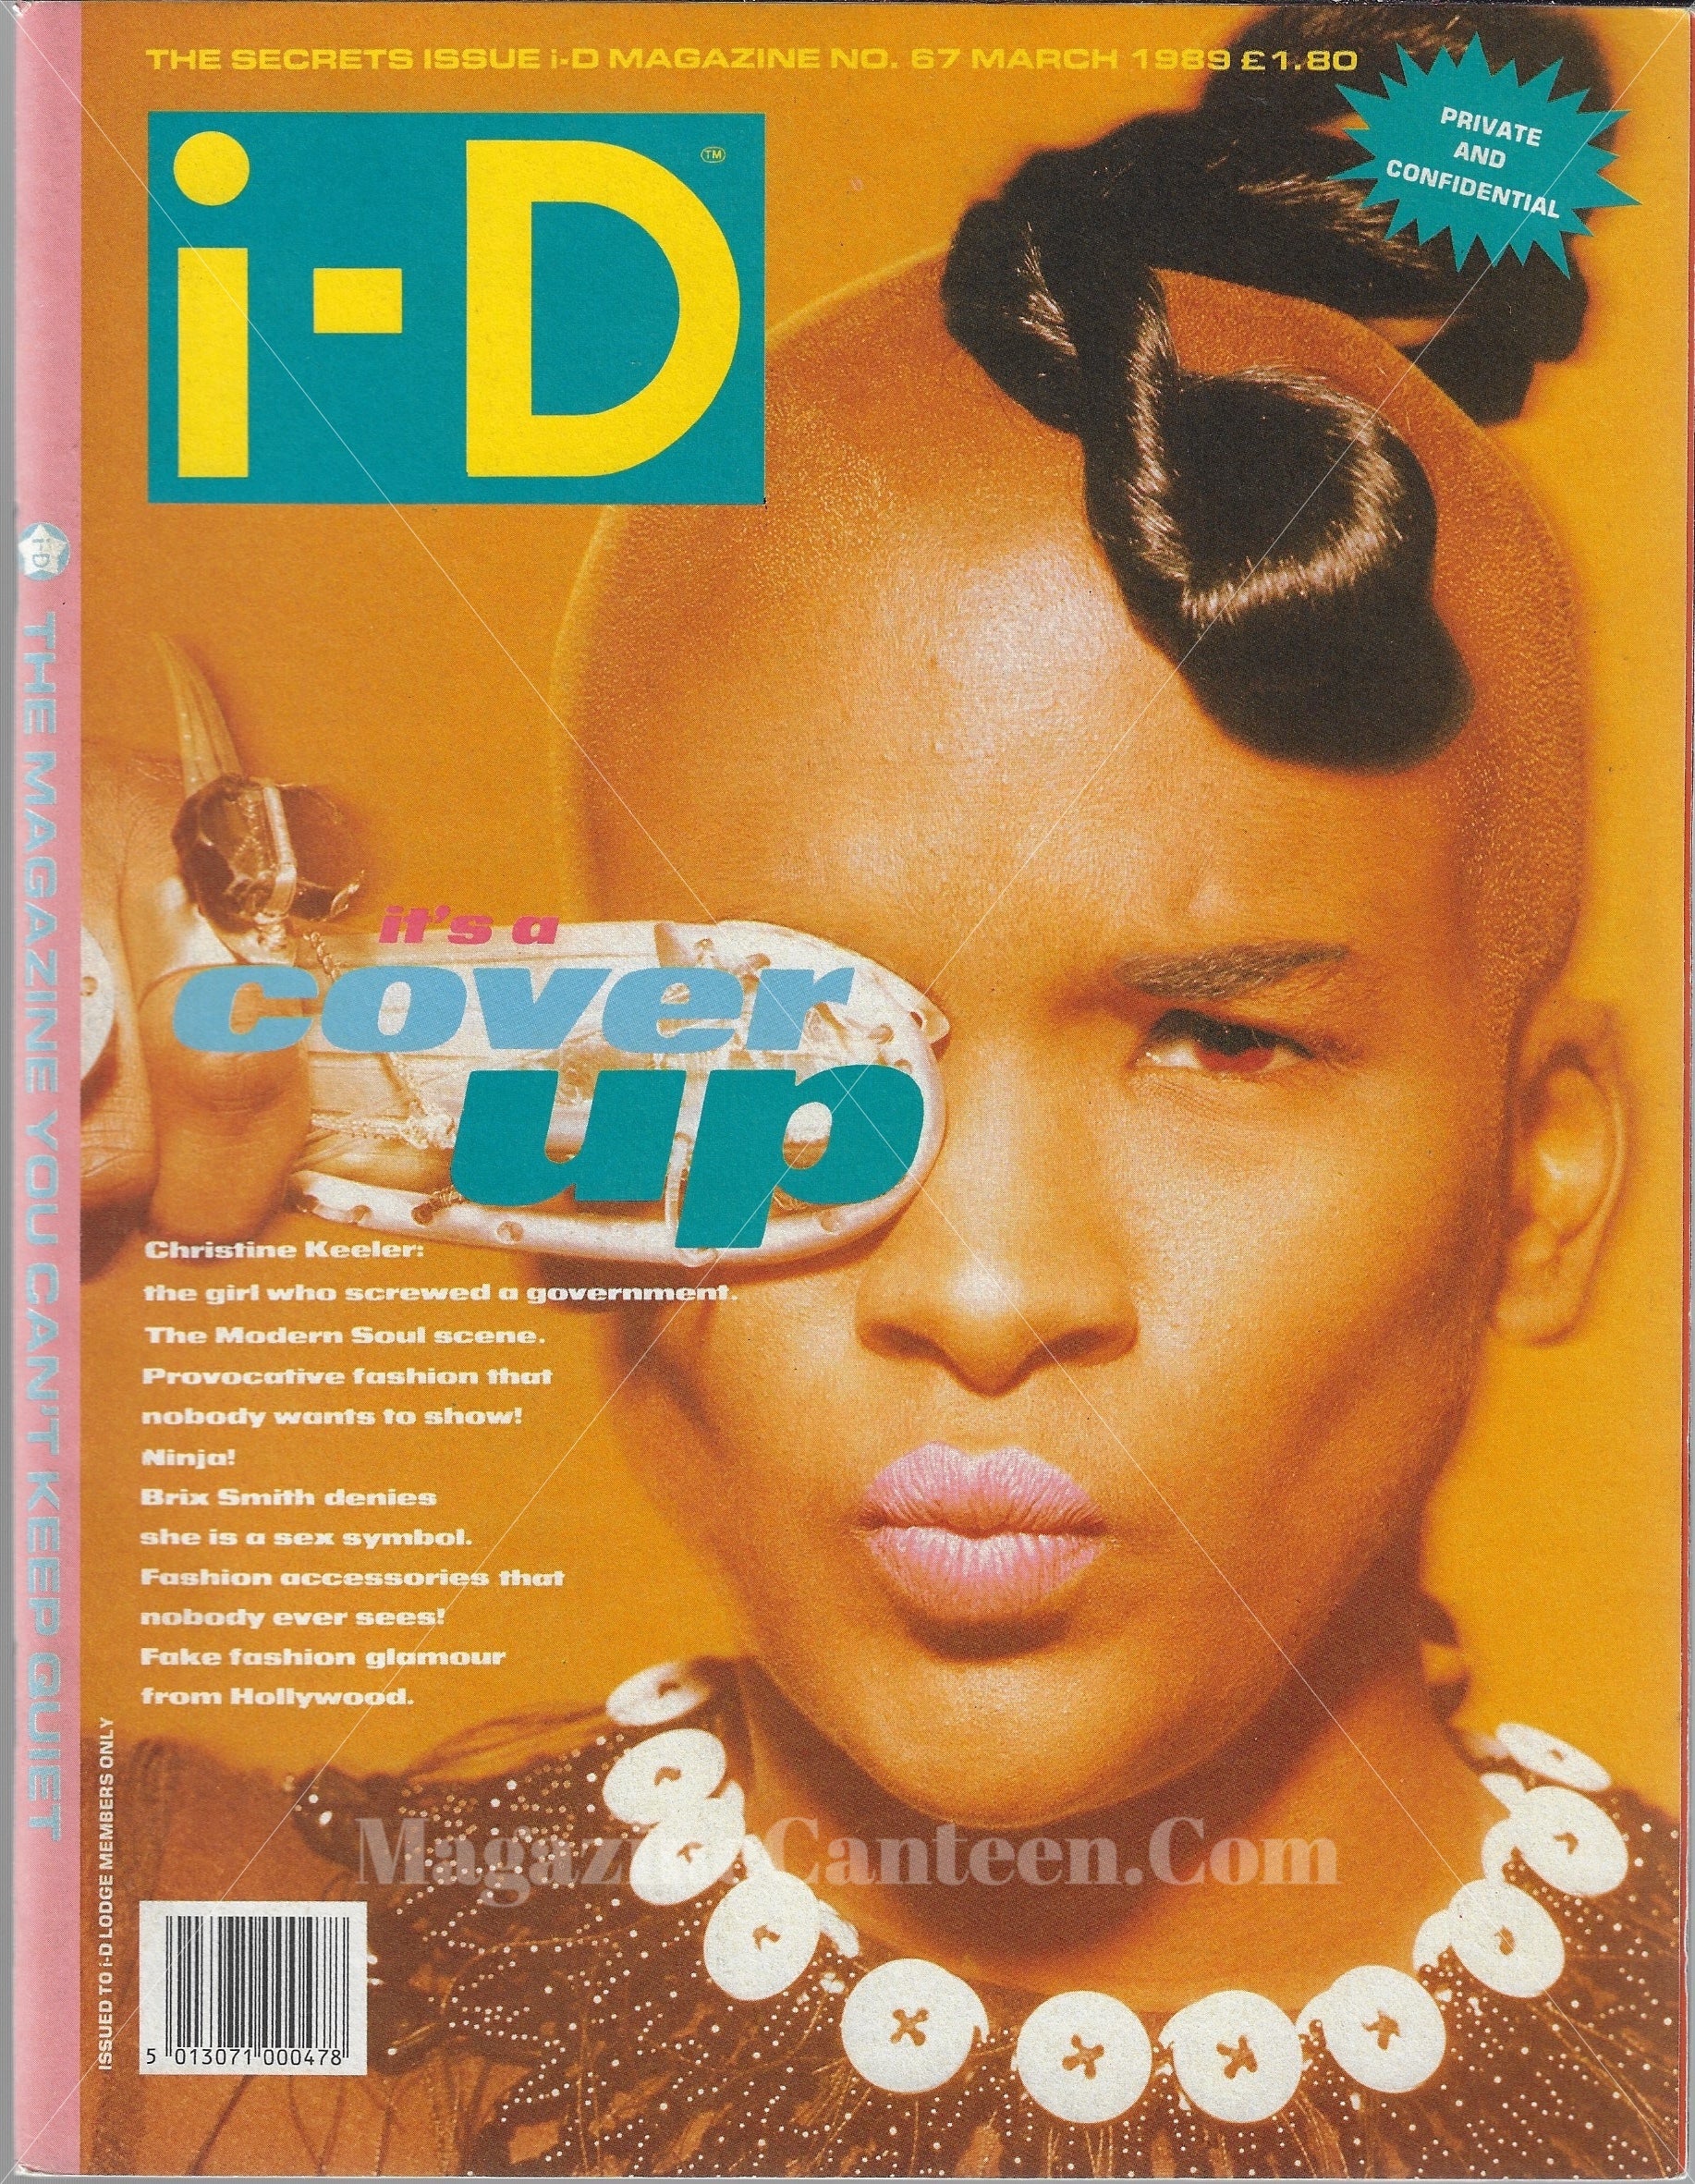 I-D Magazine 67 - The Secrets Issue 1989